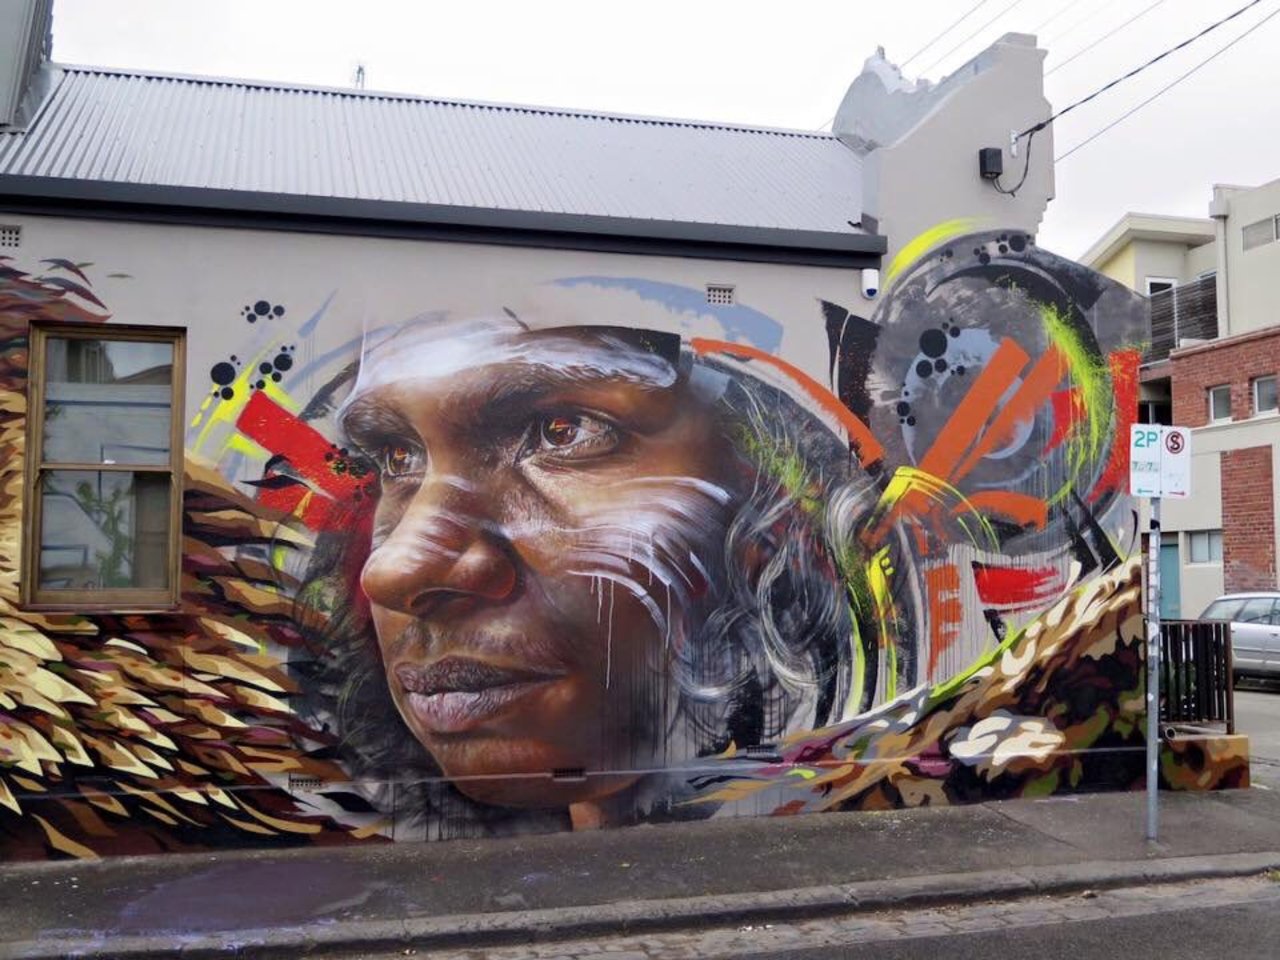 Mural by Adnate #Melbourne #Australia #mural #Streetart #urbanart #graffiti #art https://t.co/zgYDVDqOFu